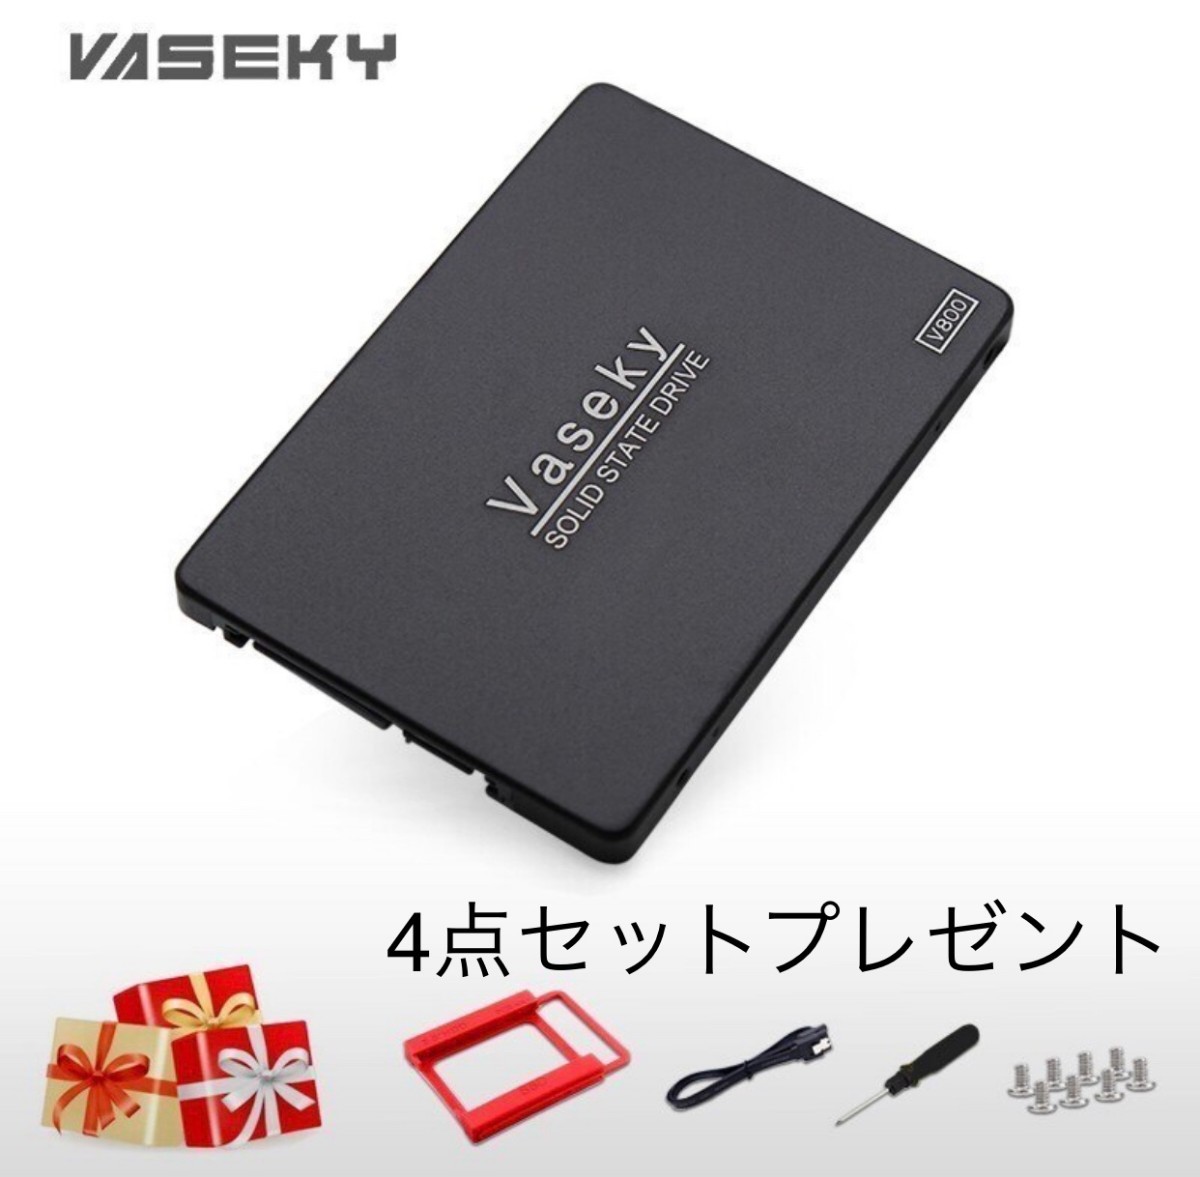 SSD 120GB Vaseky 新品 未開封2.5インチ 　テレワーク推薦品(1000以上プレゼント付き)限定販売、早い者勝ち